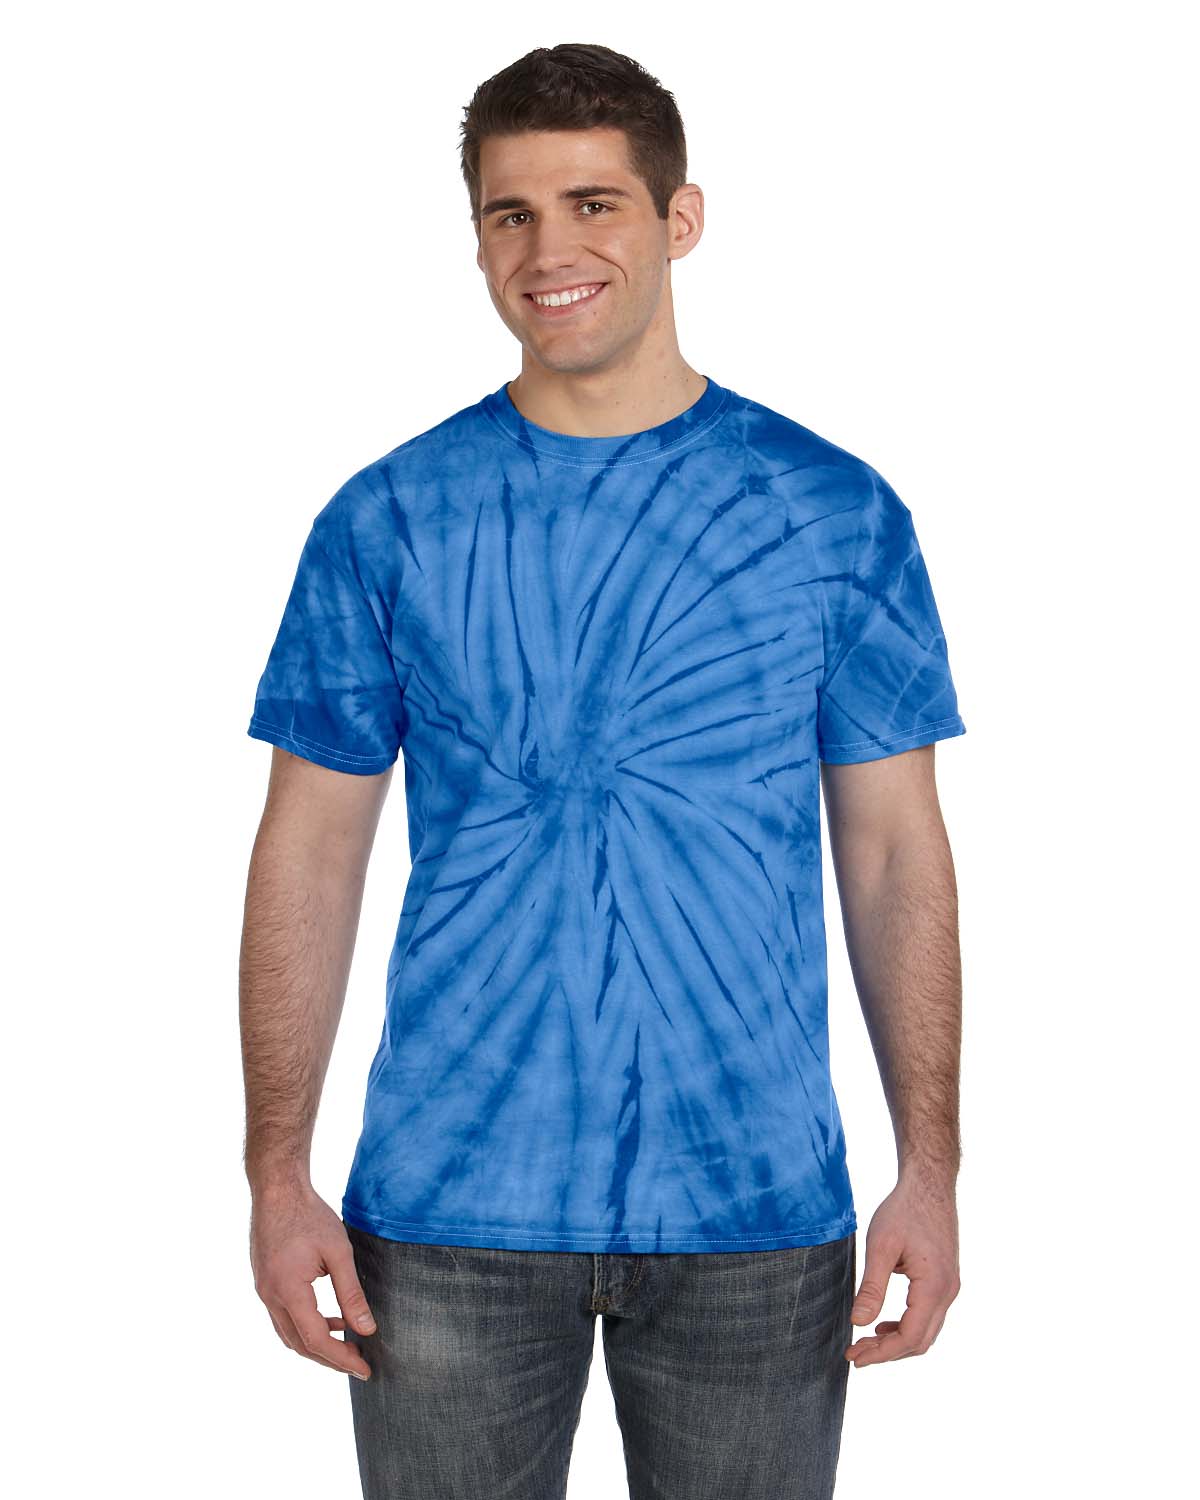 Dye 5.4 Jiffy Shirts | Tie Shirt Adult T Spider Cotton Oz. Cd101 100%